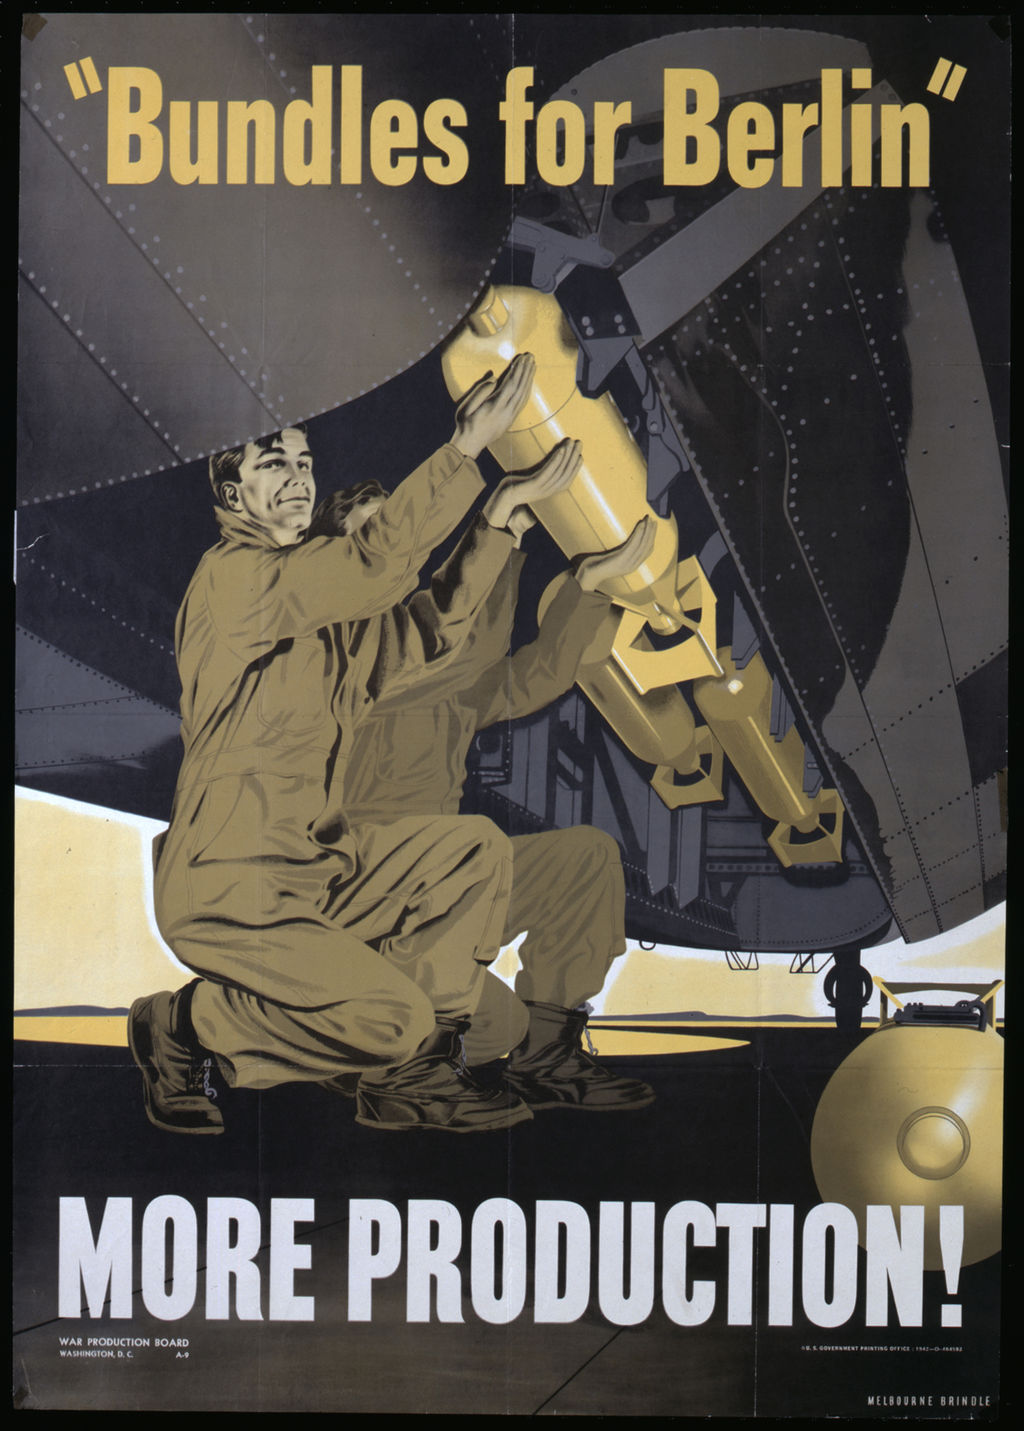 Plakat: "Bundles for Berlin - More Production!", 1942